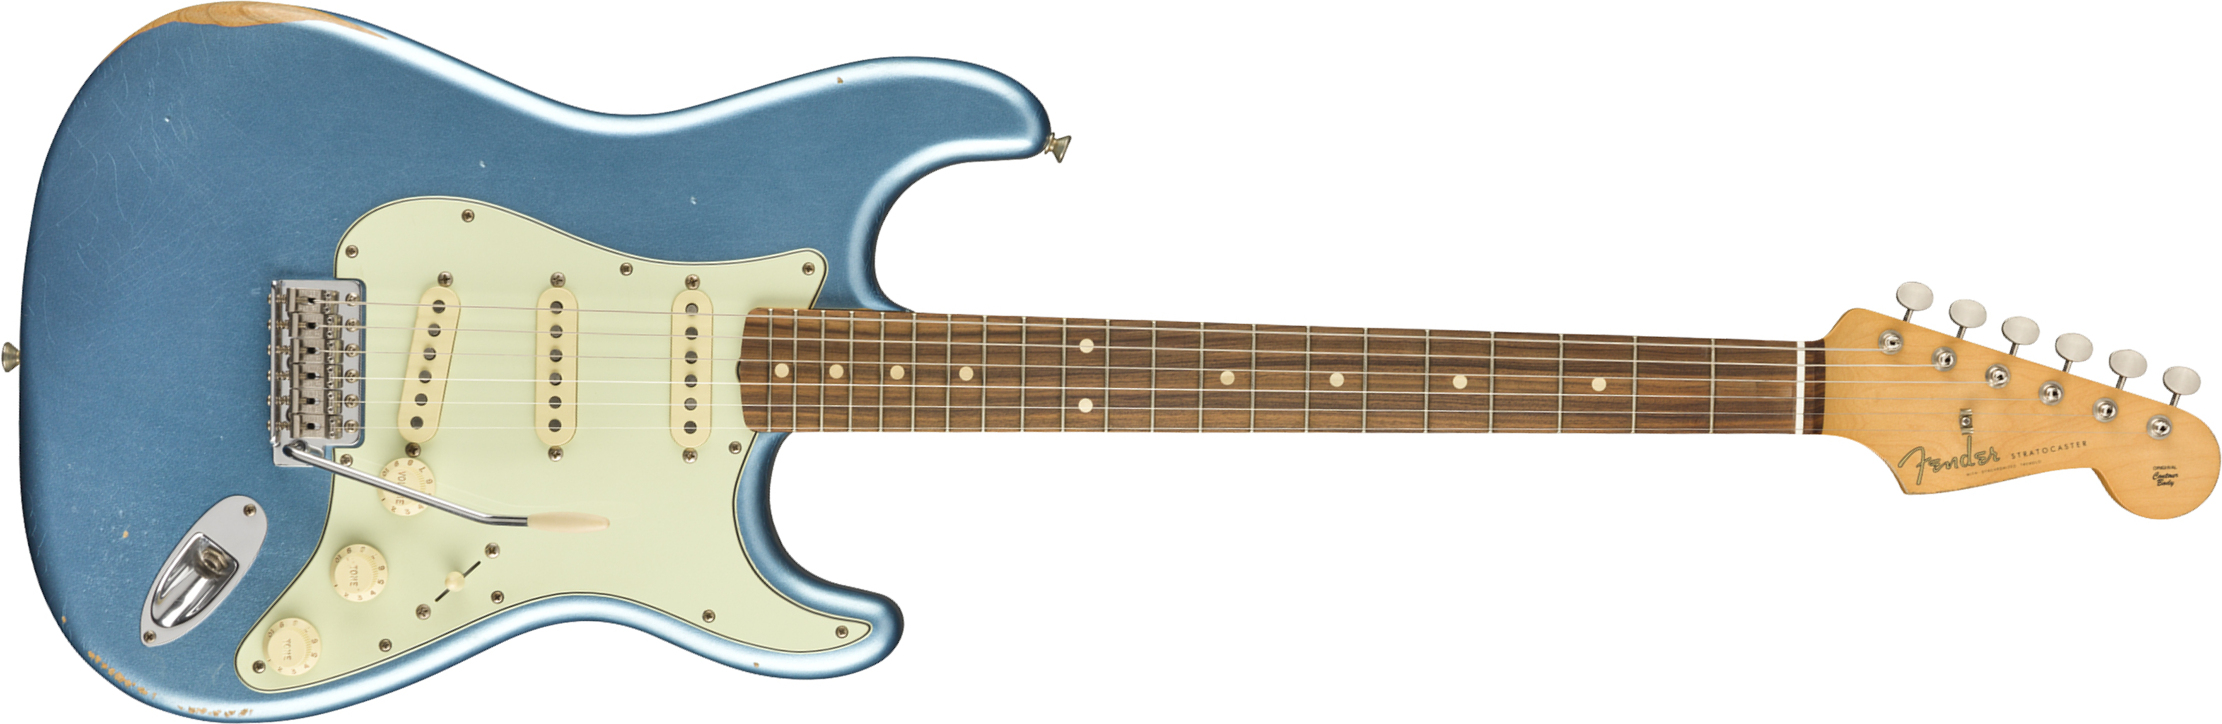 Fender Strat 60s Road Worn Mex Pf - Lake Placid Blue - Str shape electric guitar - Main picture